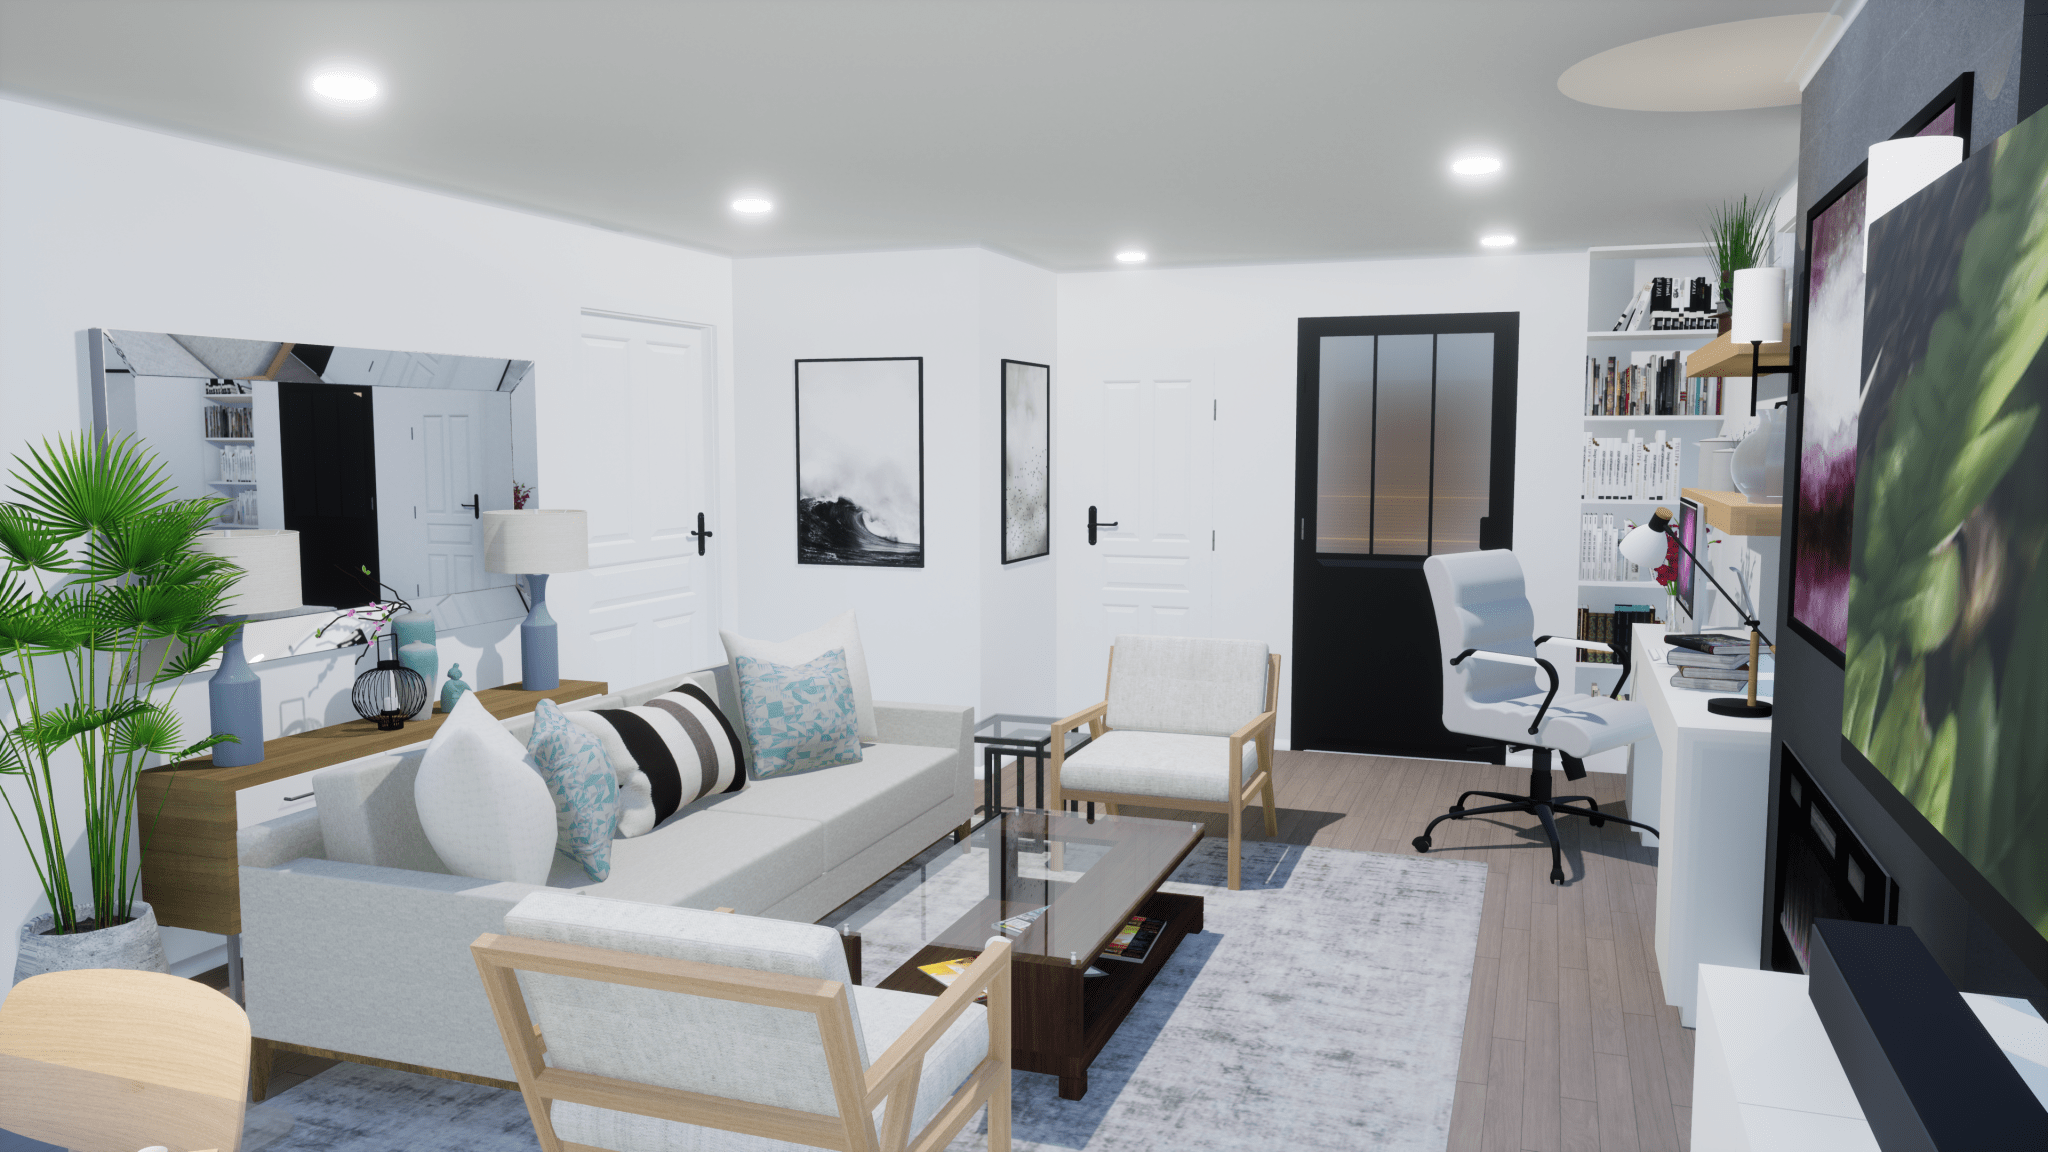 basement apartment living room interior design